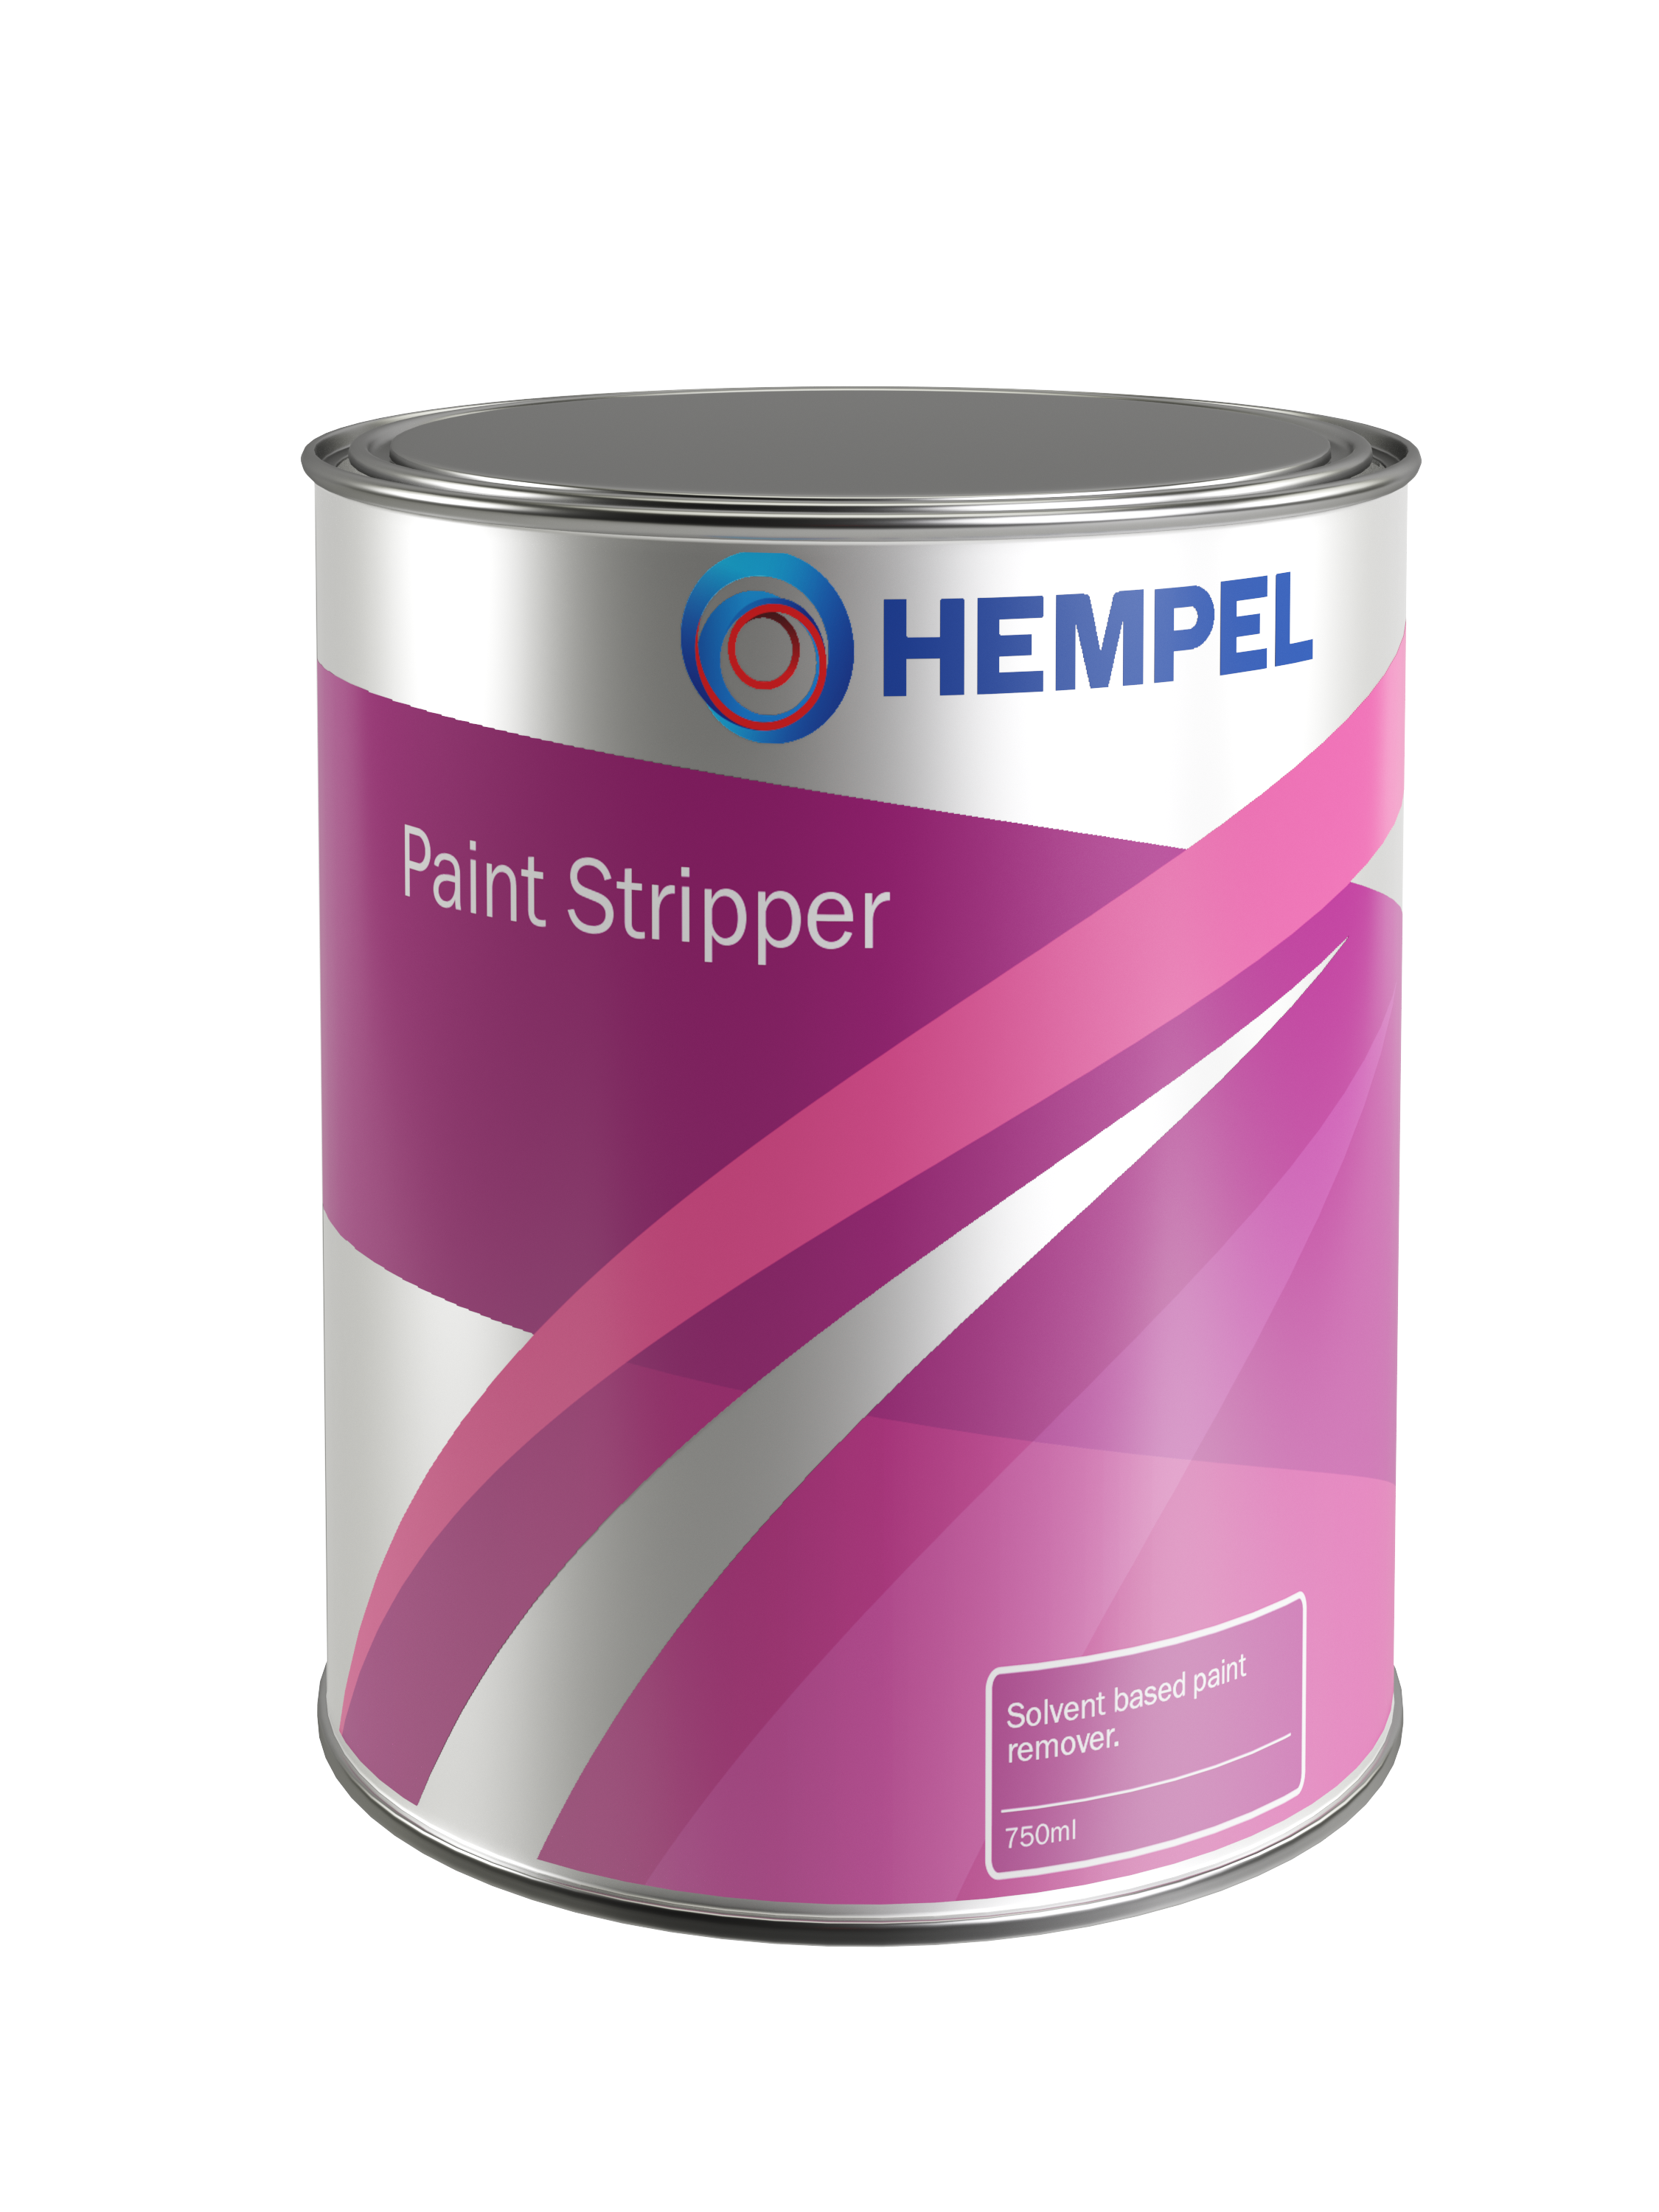 Hempel-Hempel Paint stripper